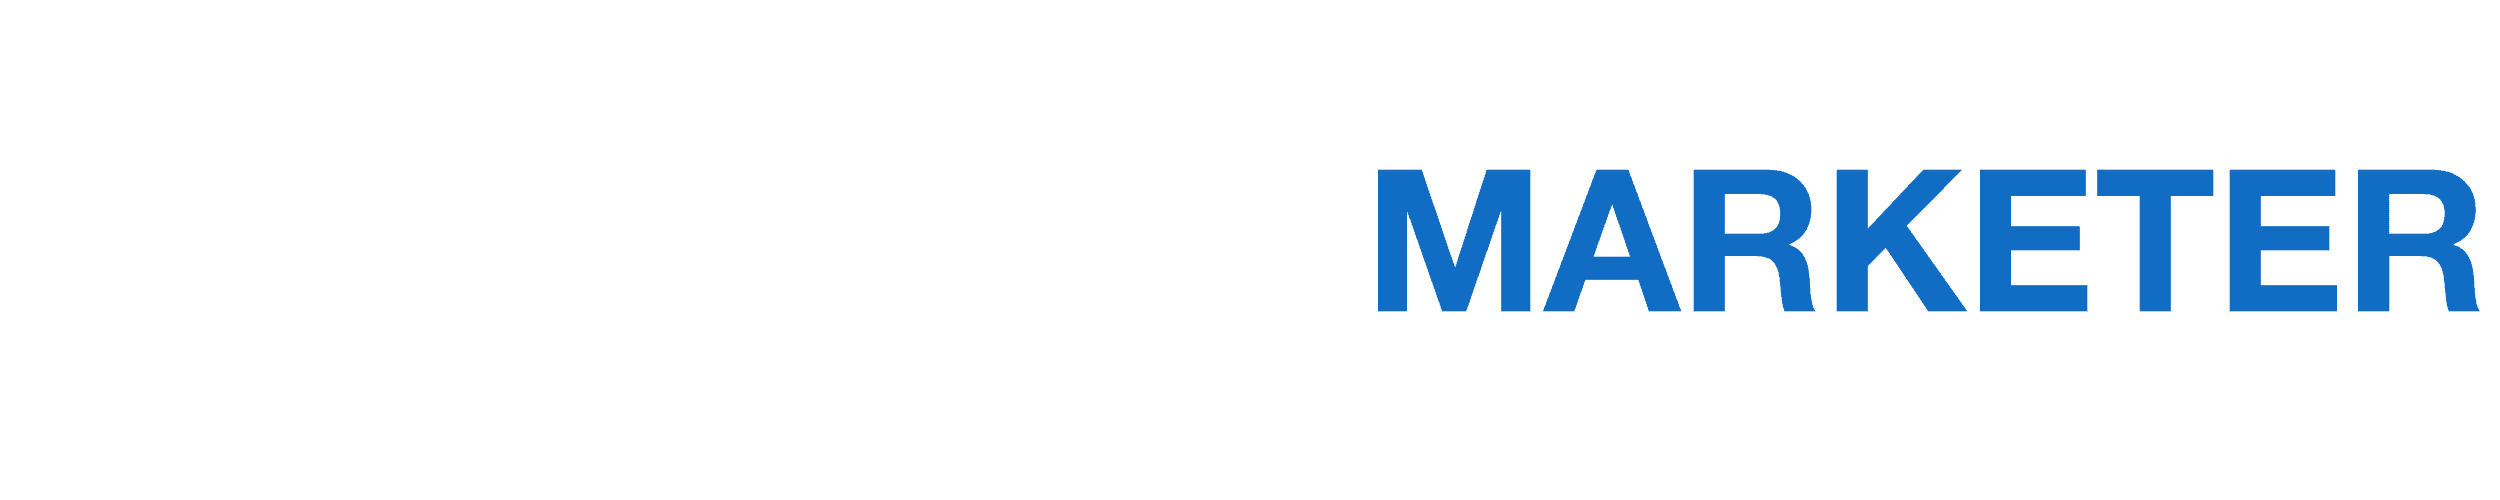 Socialmediamarketerid Logo